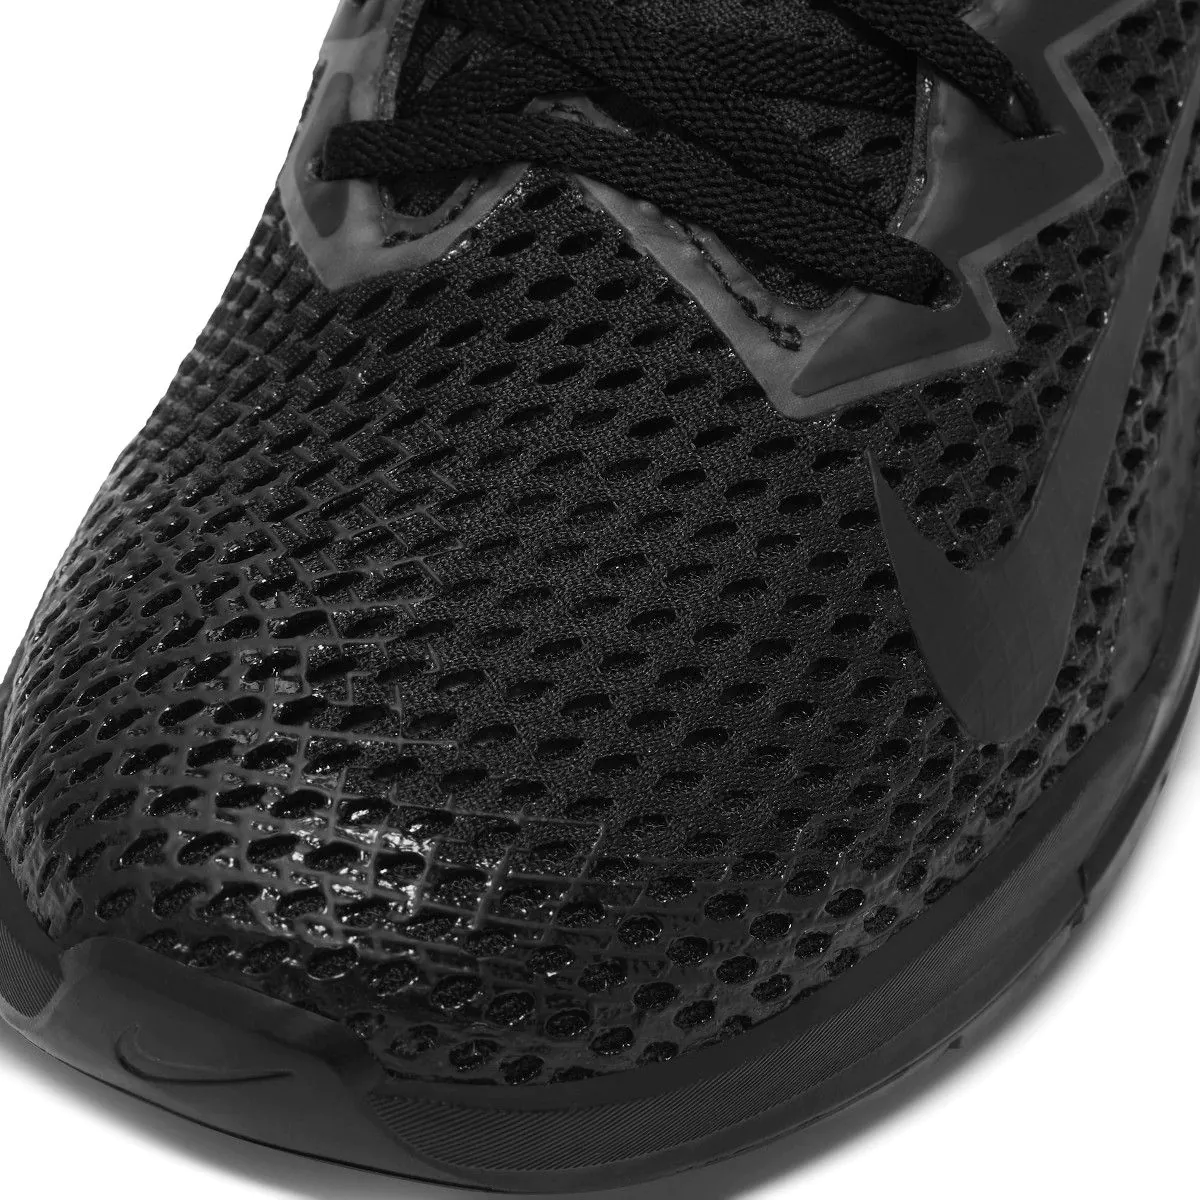 Nike Metcon 6 nike metcon 6 size 12 Men's Training Shoes CK9388-011